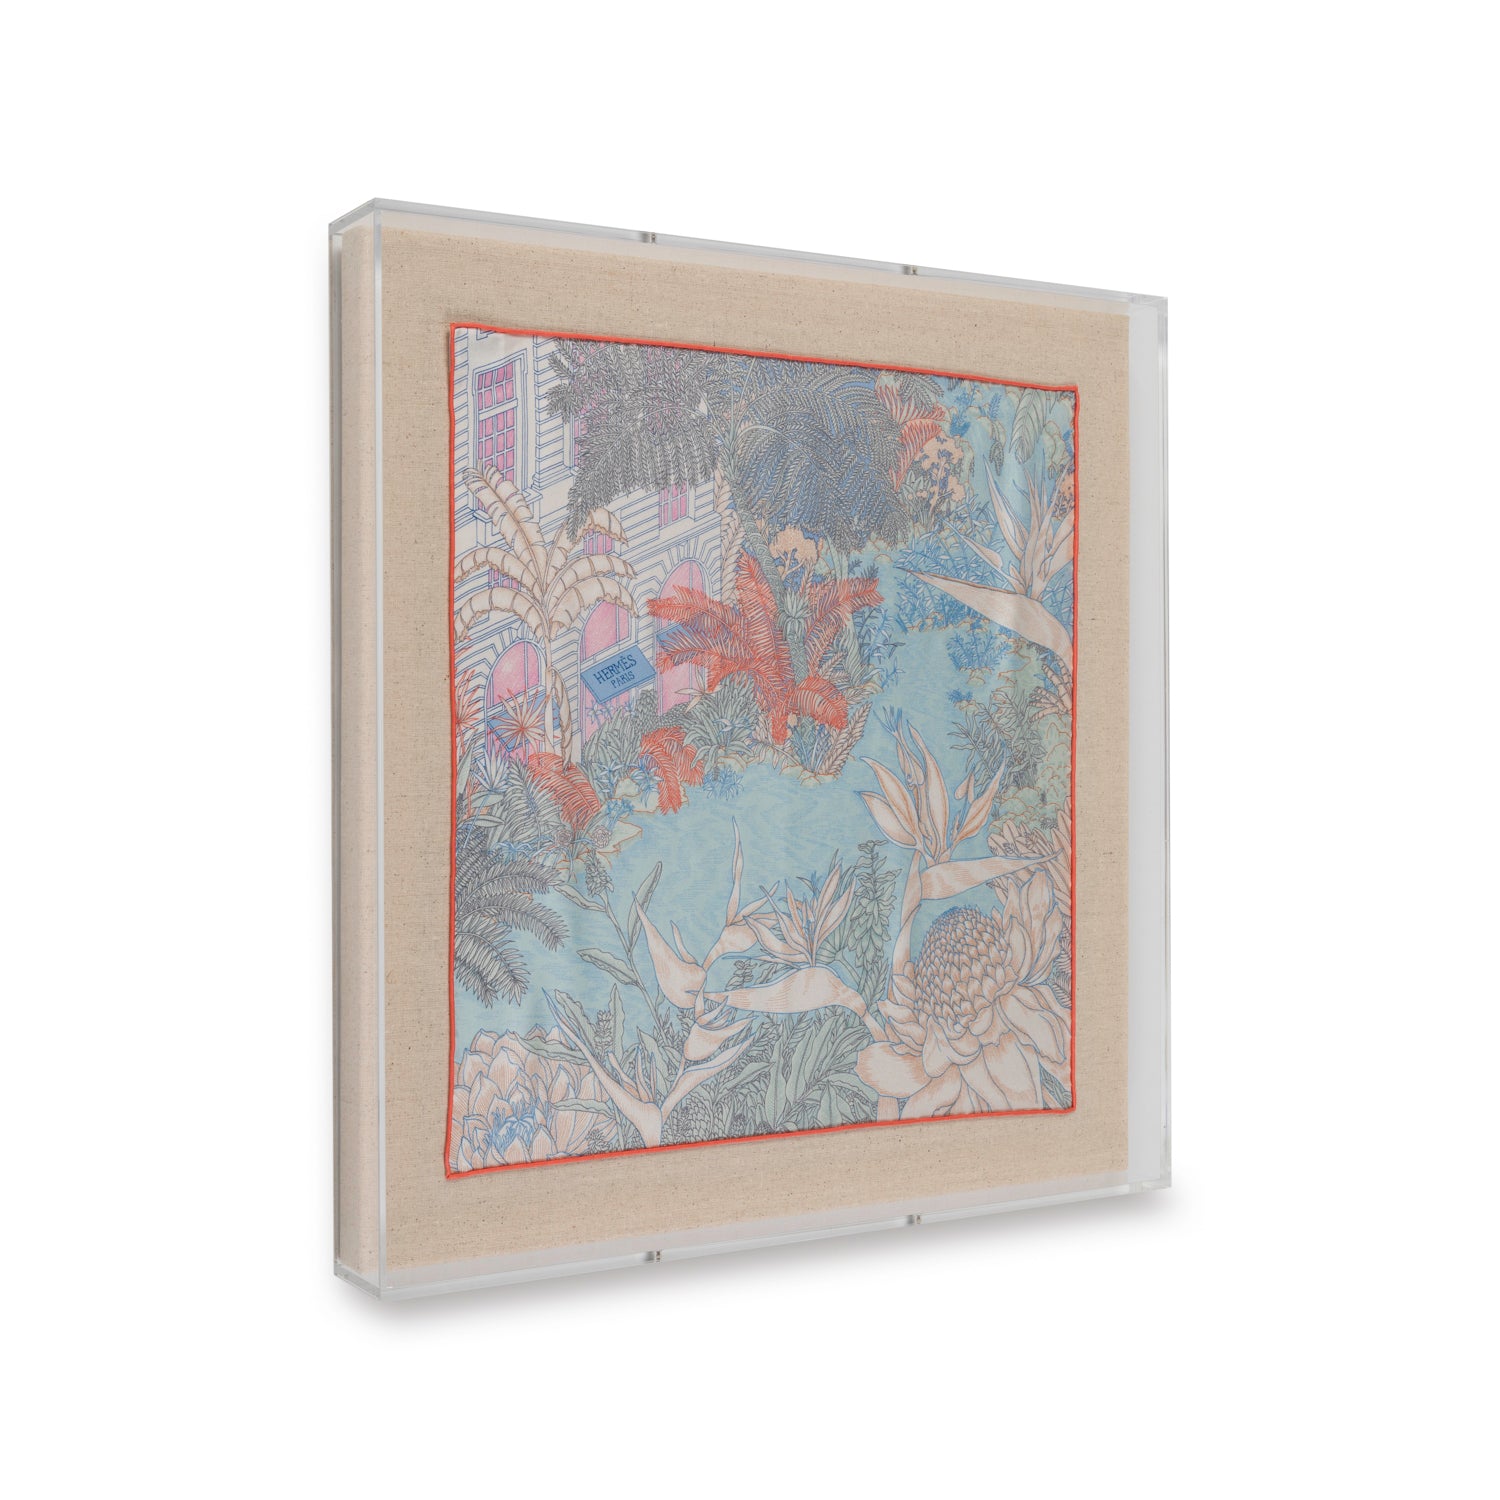 Framed Hermès Faubourg Tropical Bleu Ciel Red Fronds Silk Scarf in a 20x20x2